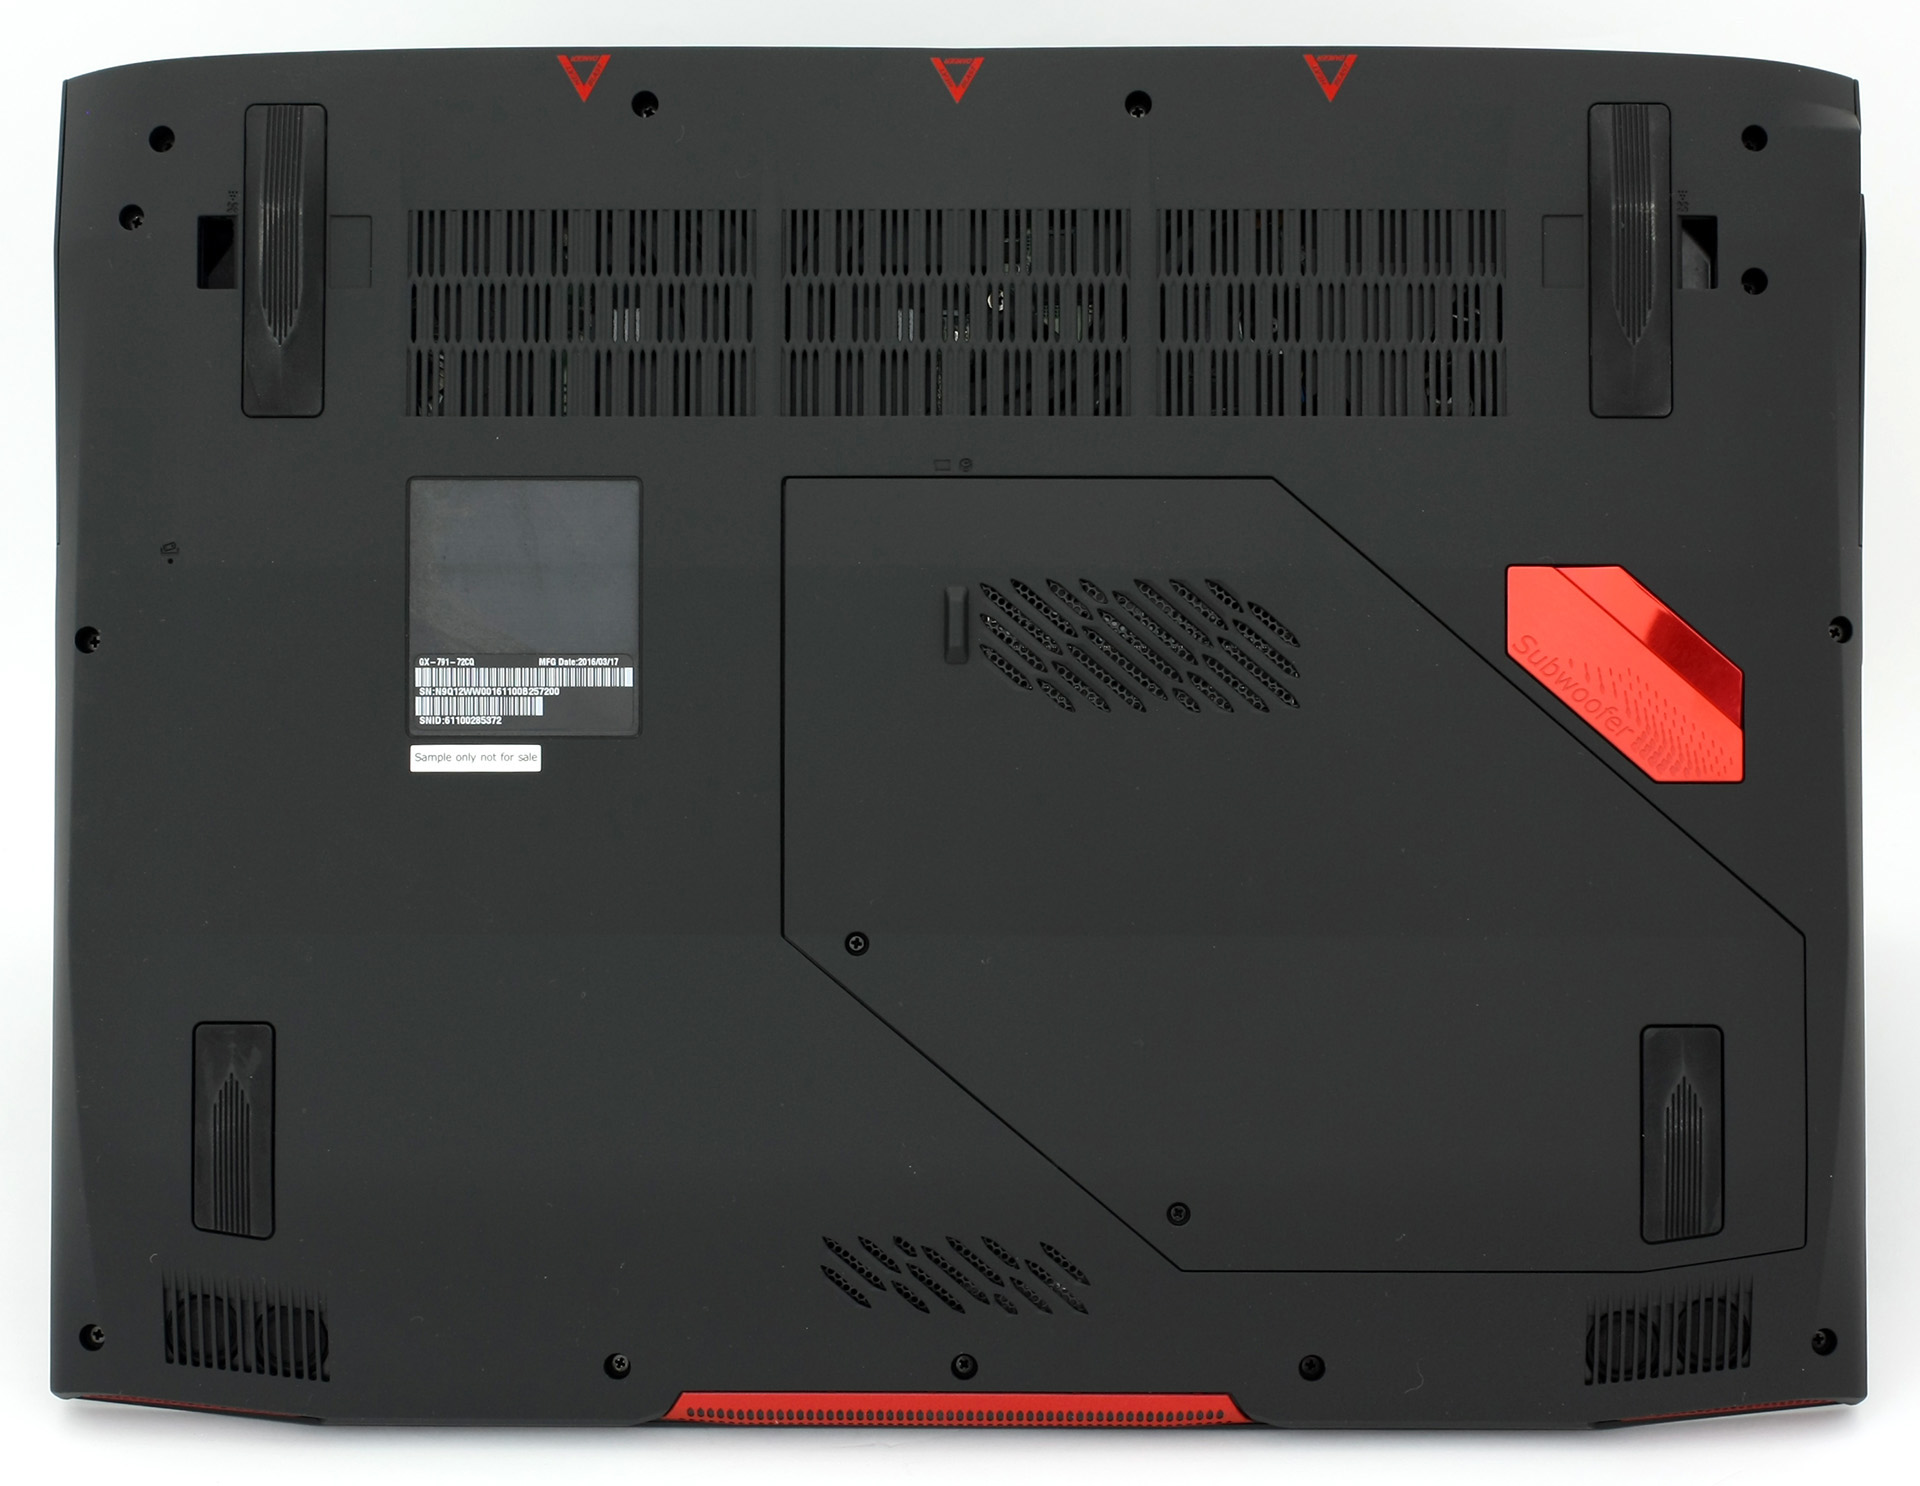 Acer Predator 17X (GX-791) review - desktop-like experience on a